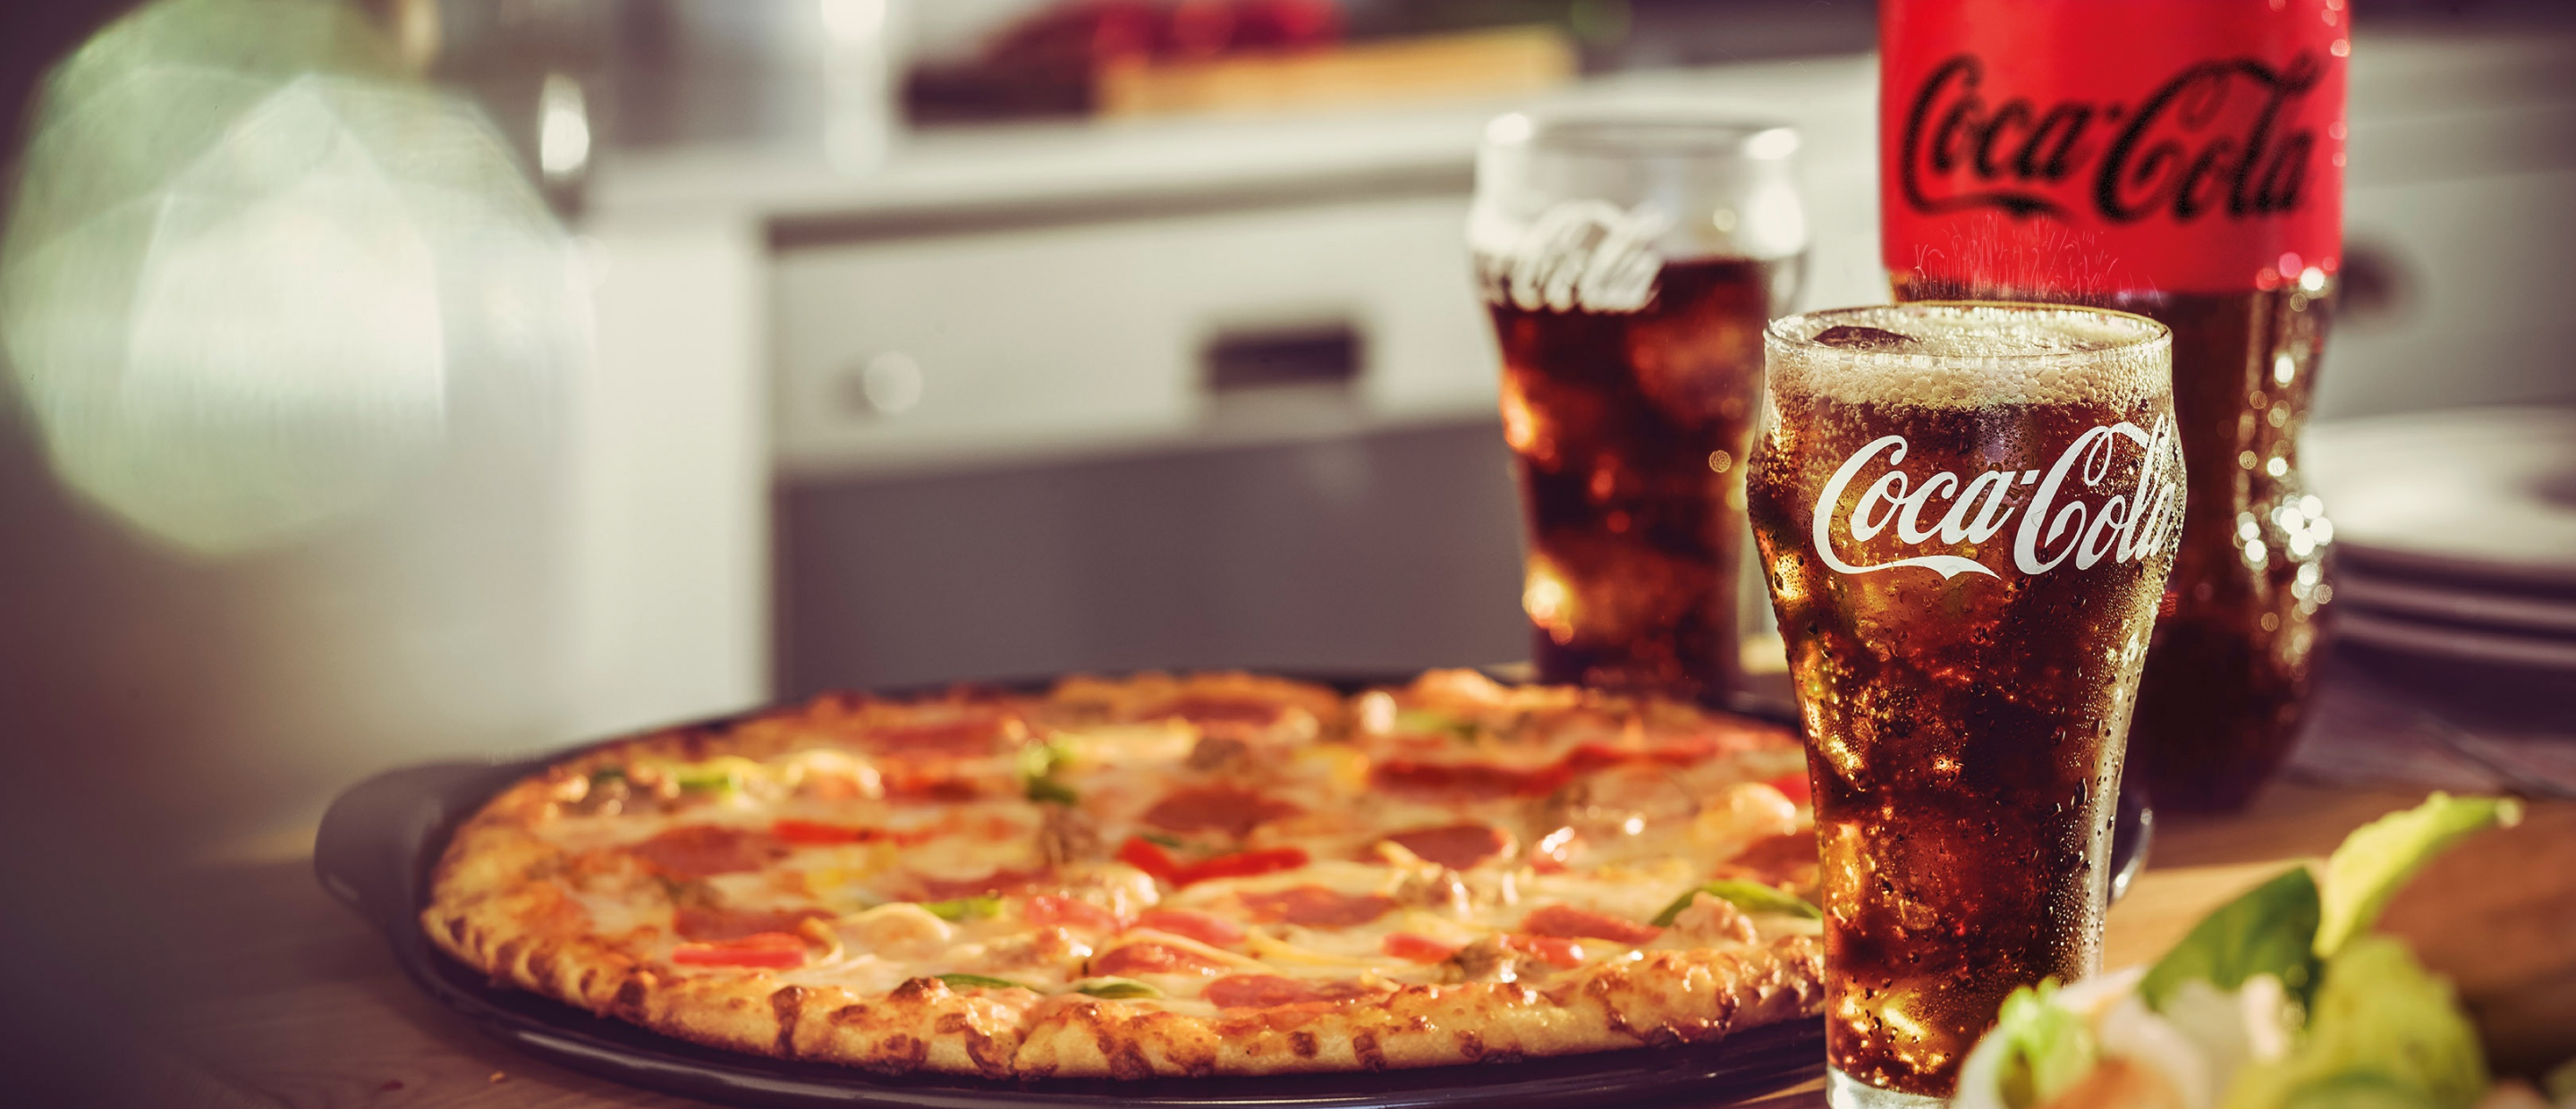 coca-cola with pizza meals